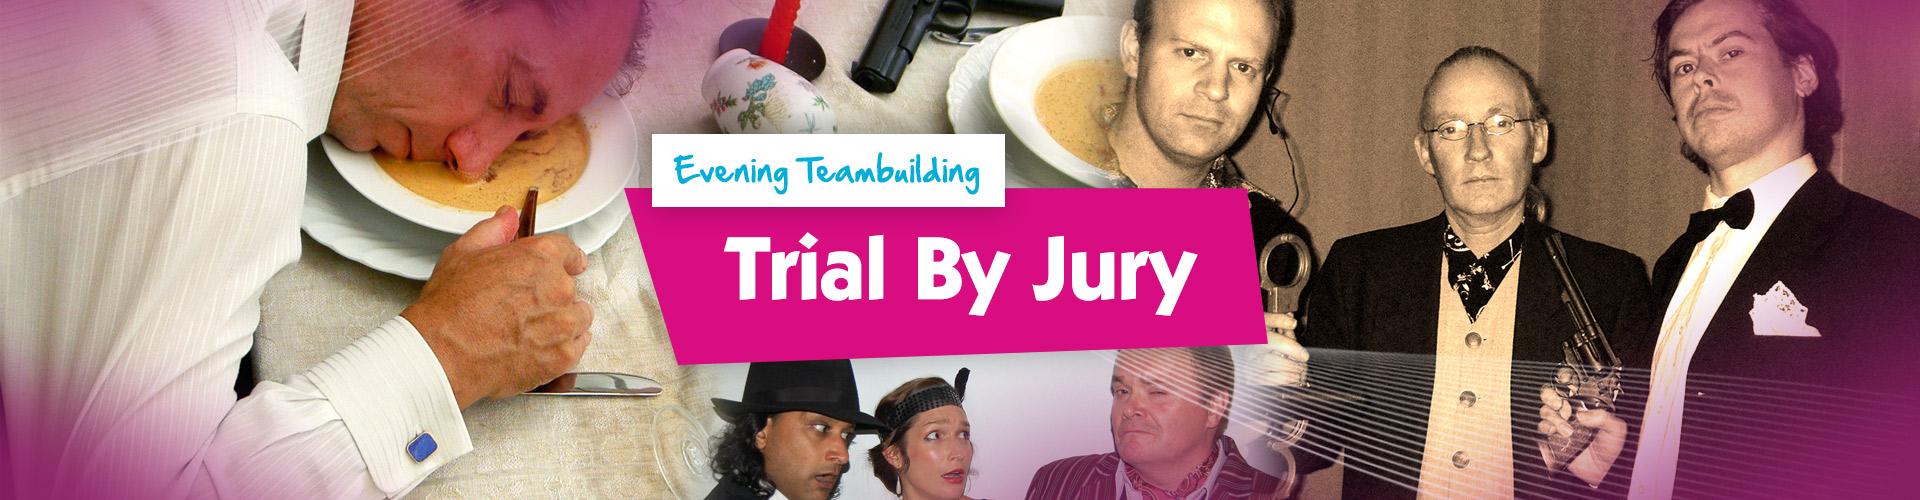 Teambuilding | Trial By Jury